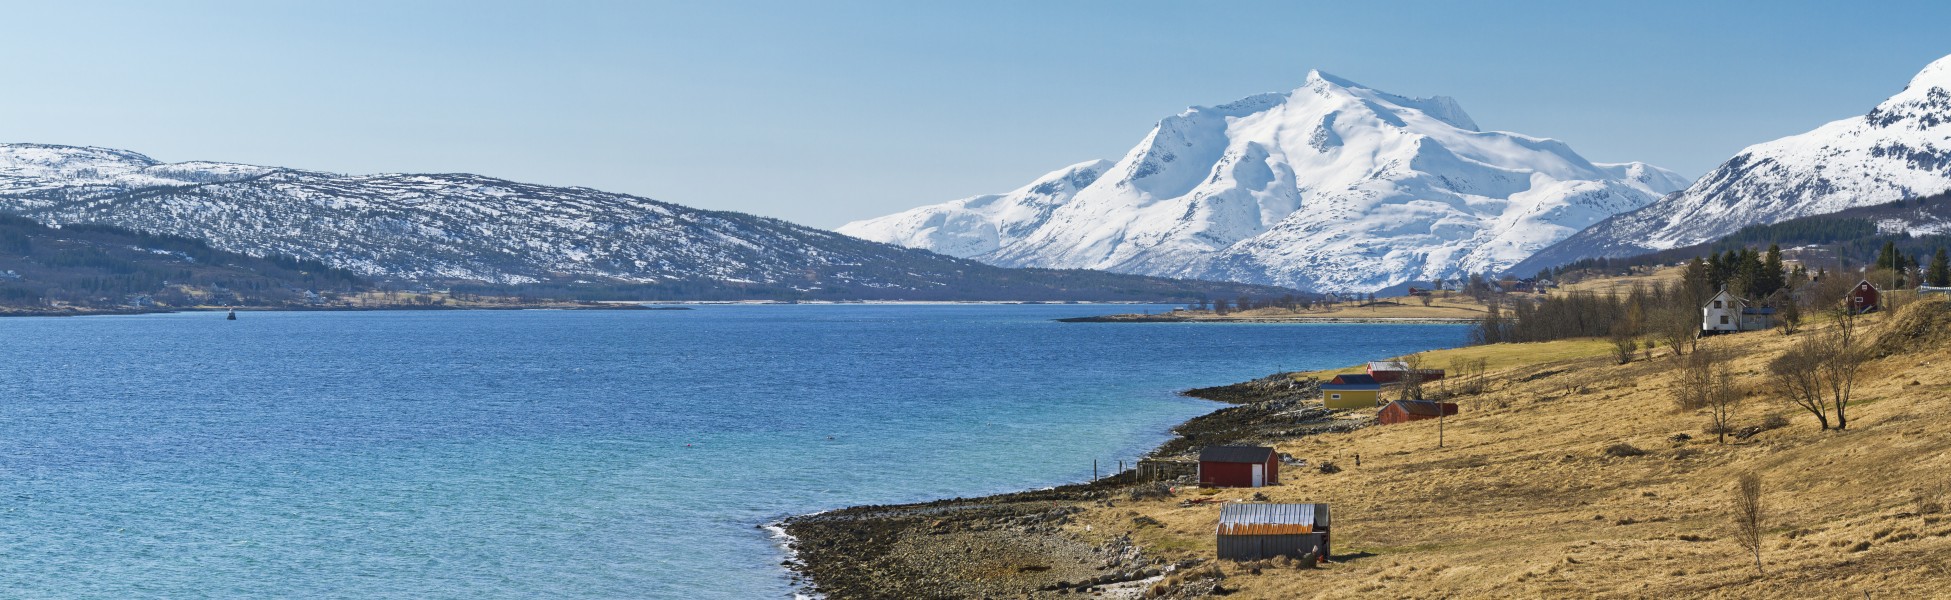 View to coast of Tjeldsundet, Hinnøya, Nordland, Norway, 2015 April (02)